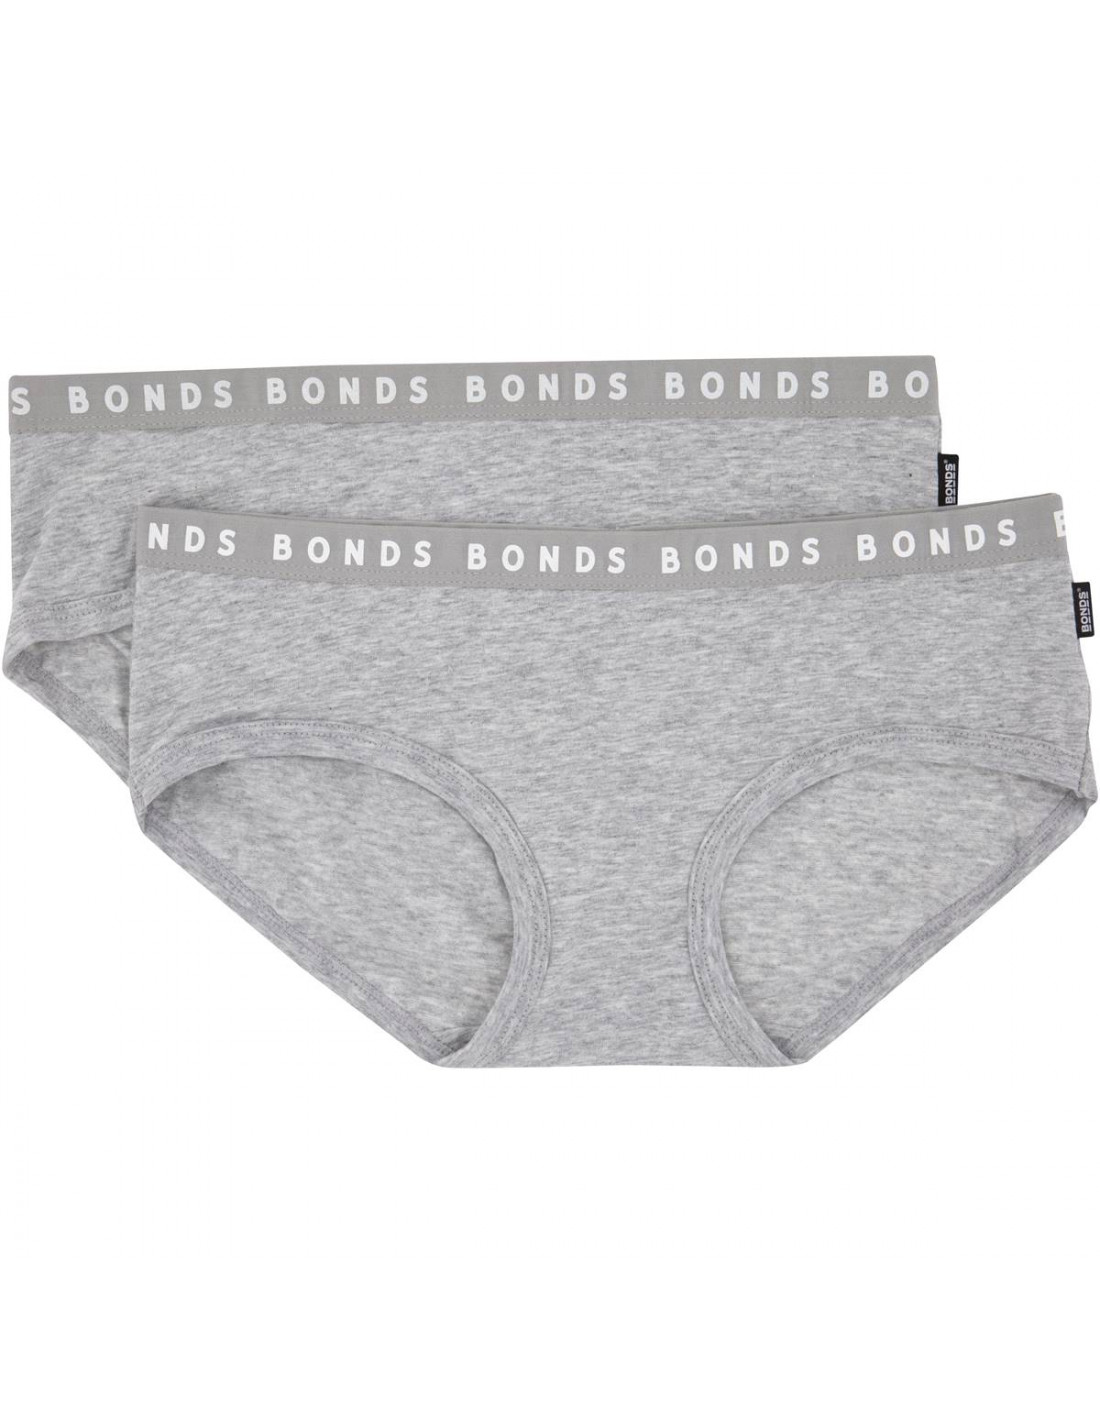 Bonds Ladies Hipster Boyleg Size 10 Assorted 2 pack | Ally's Basket...